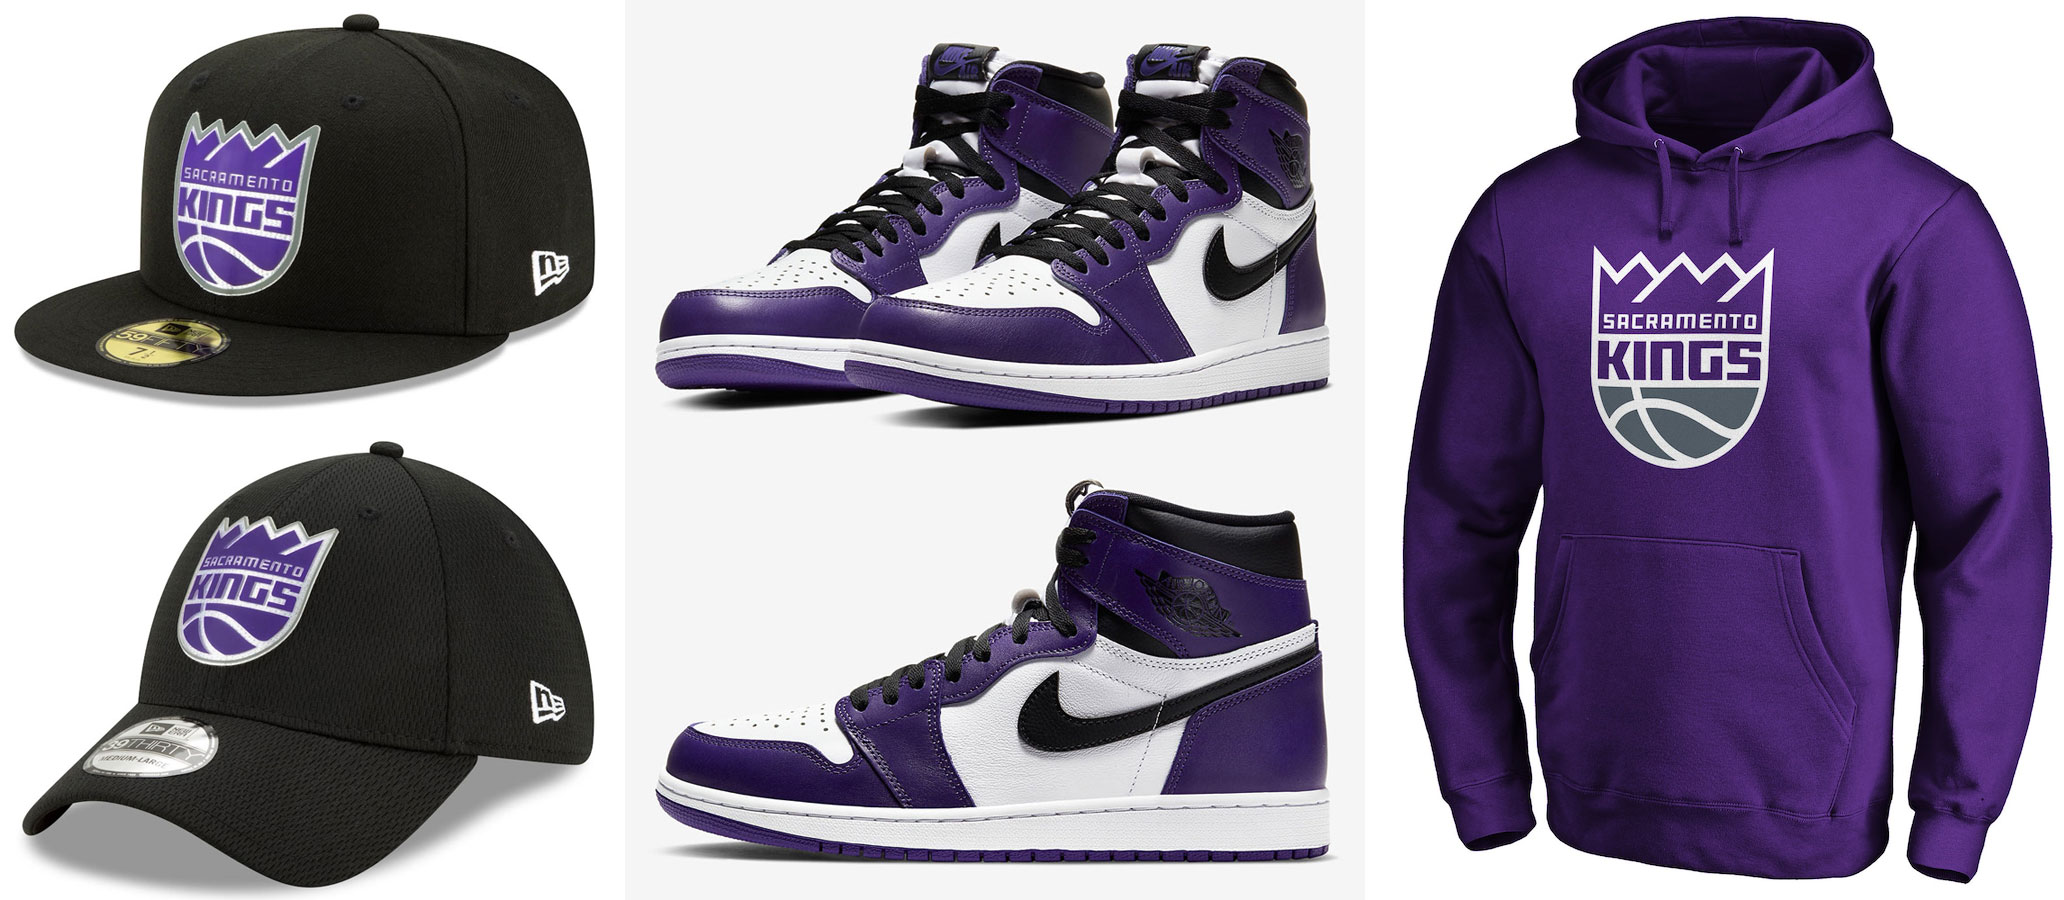 jordan 1 high court purple outfit